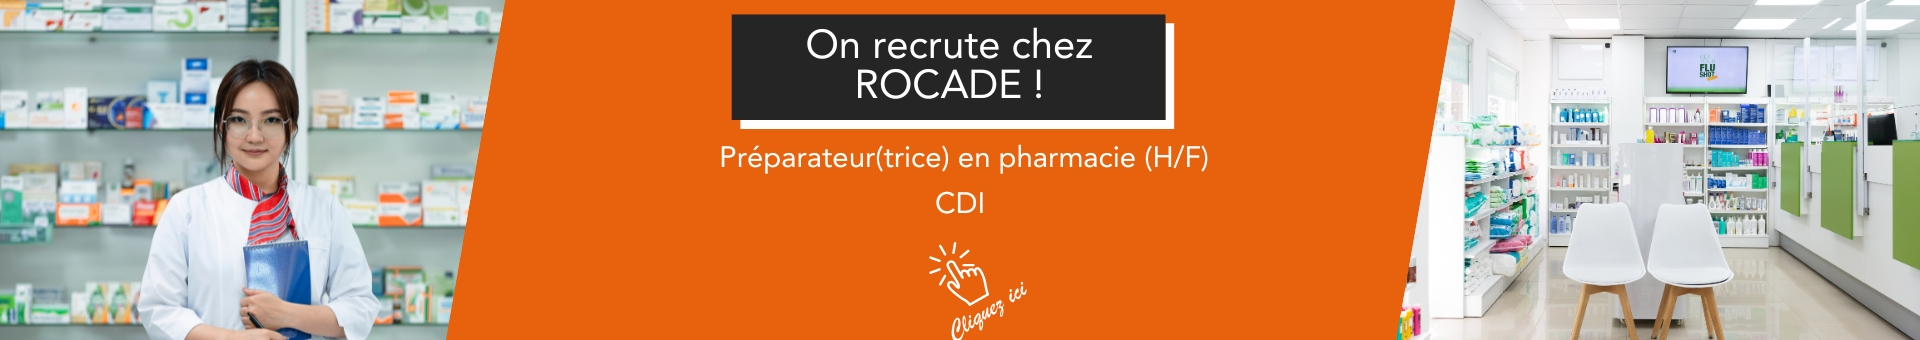 Pharmacie Rocade Compostelle,Pessac